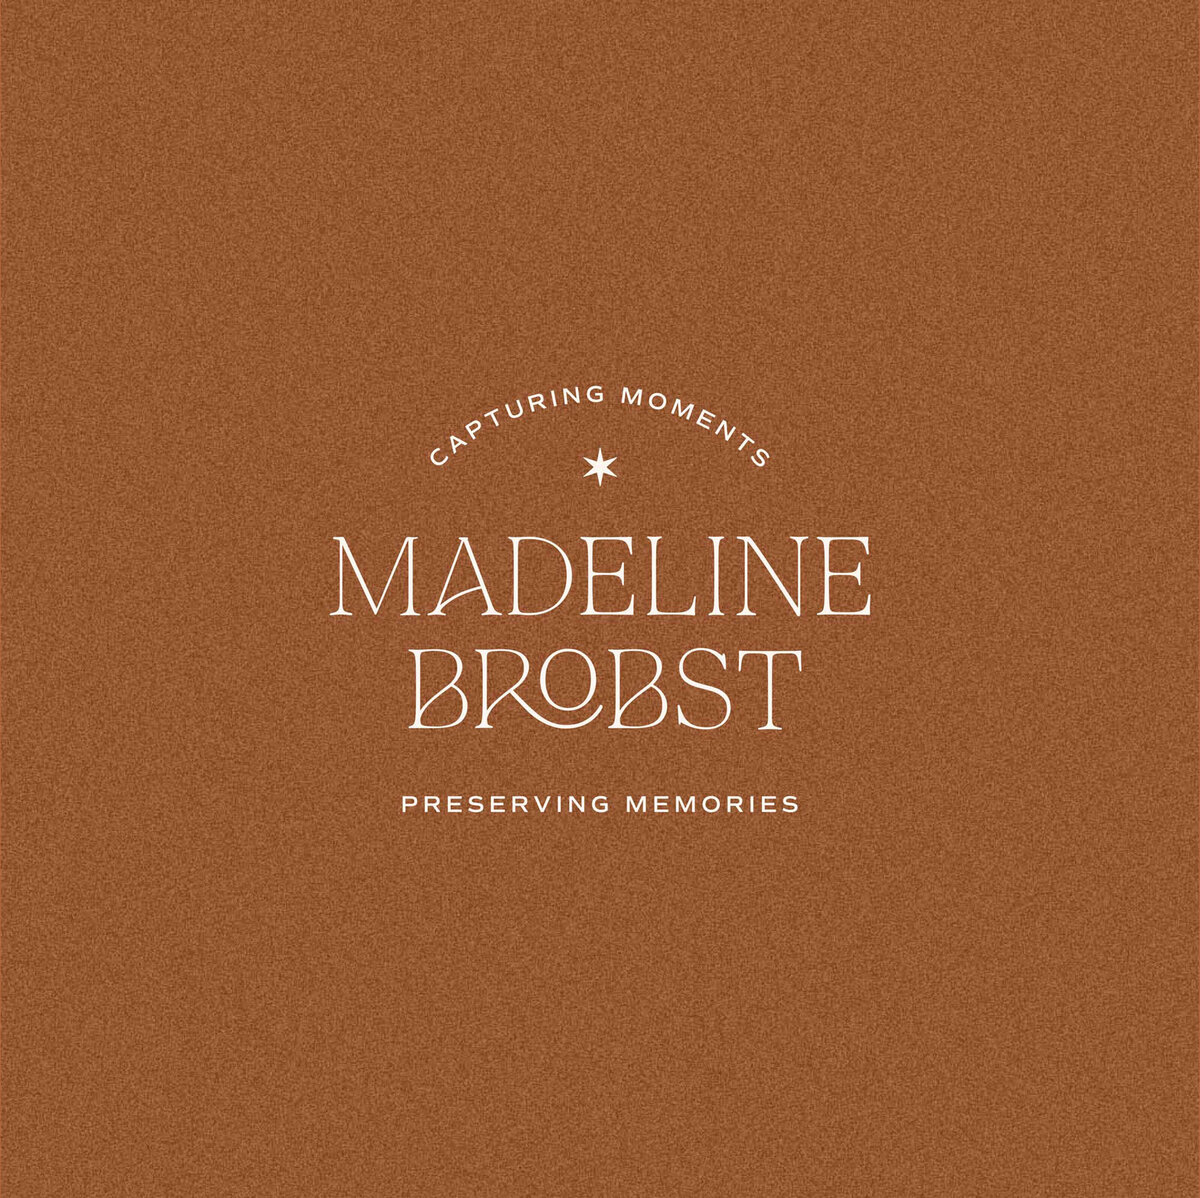 Madeline_Brobst_Brand_Identity_10